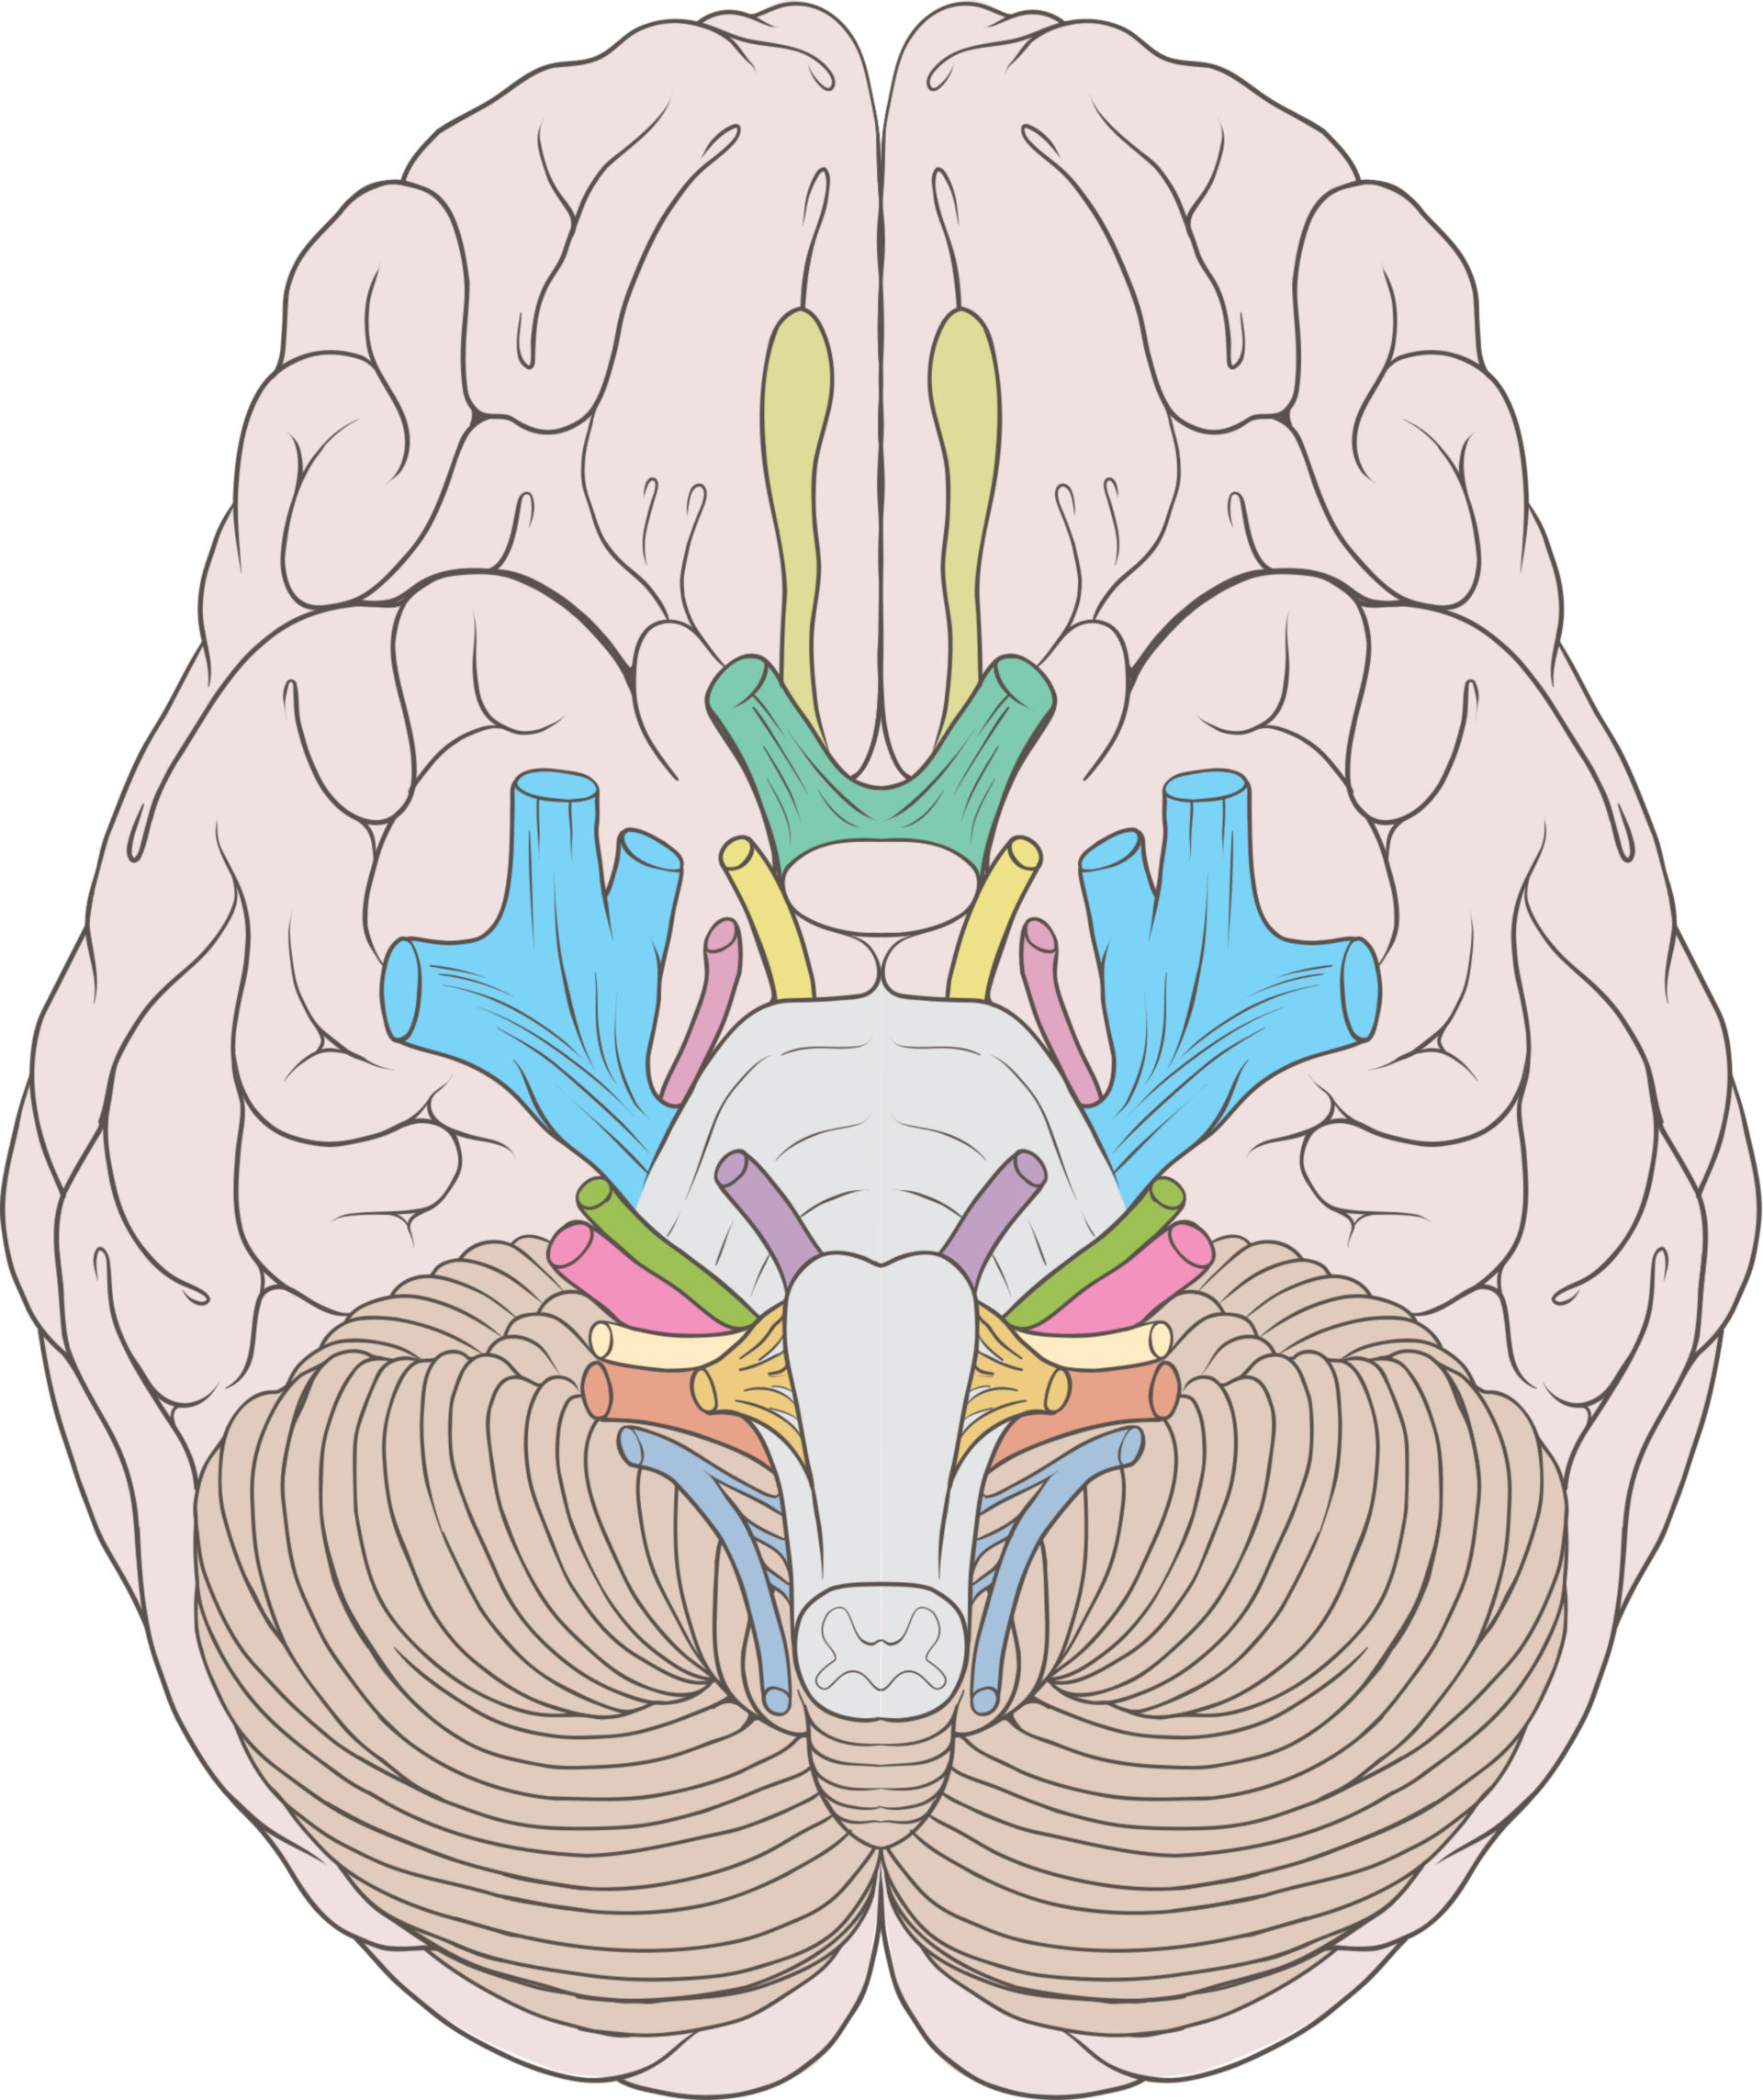 Nervi cranici (diagramma)